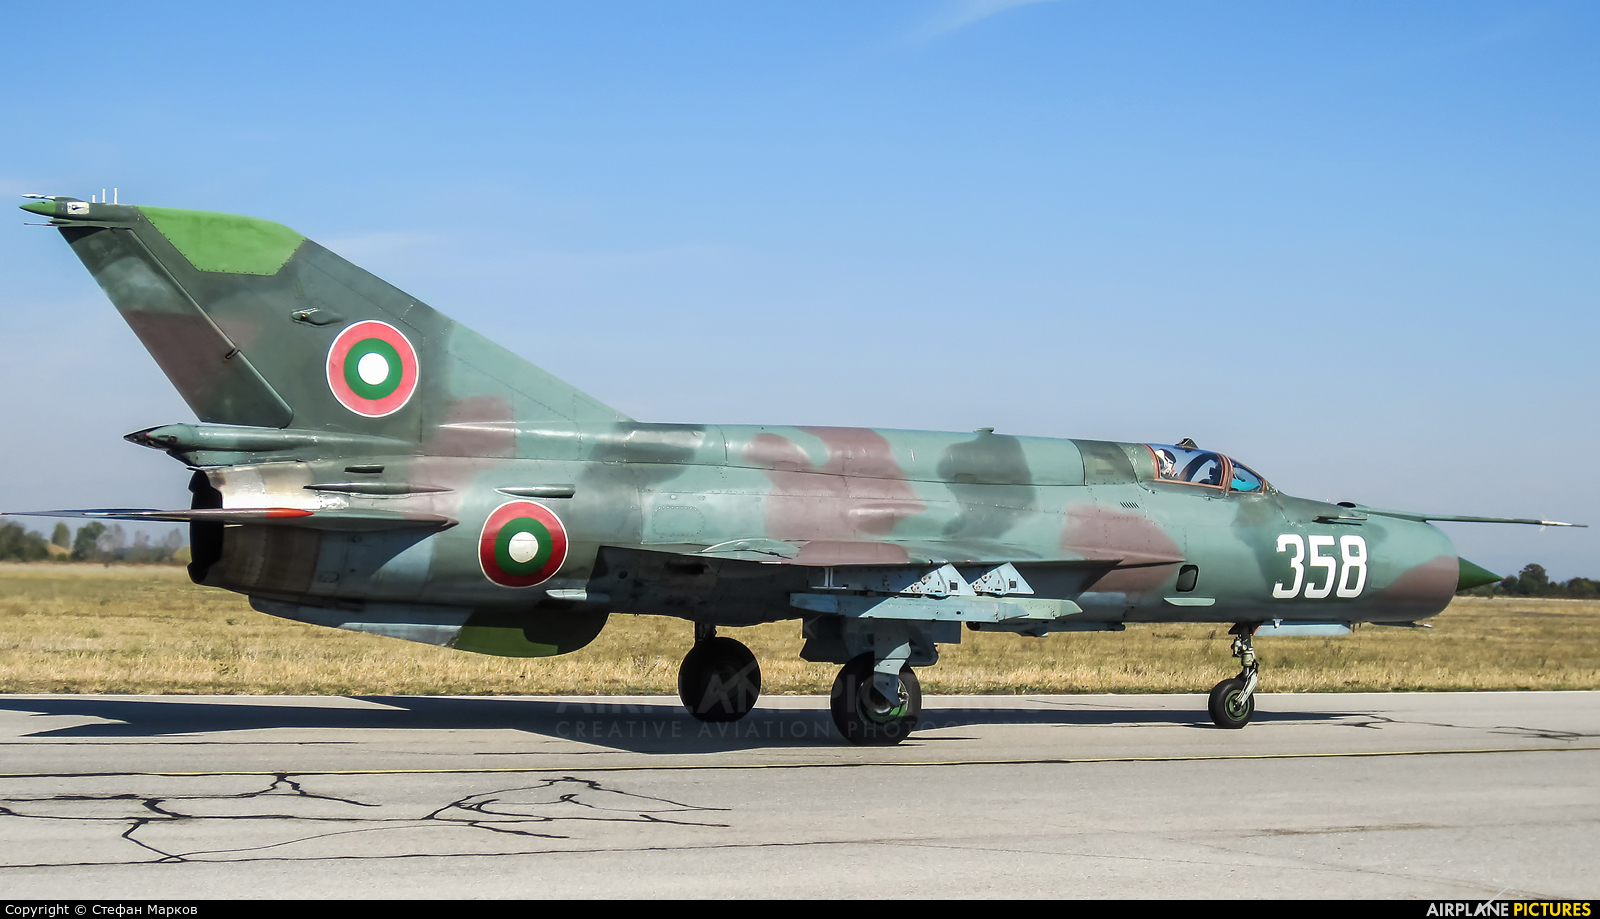 Bulgaria - Air Force 358 aircraft at Graf Ignatievo